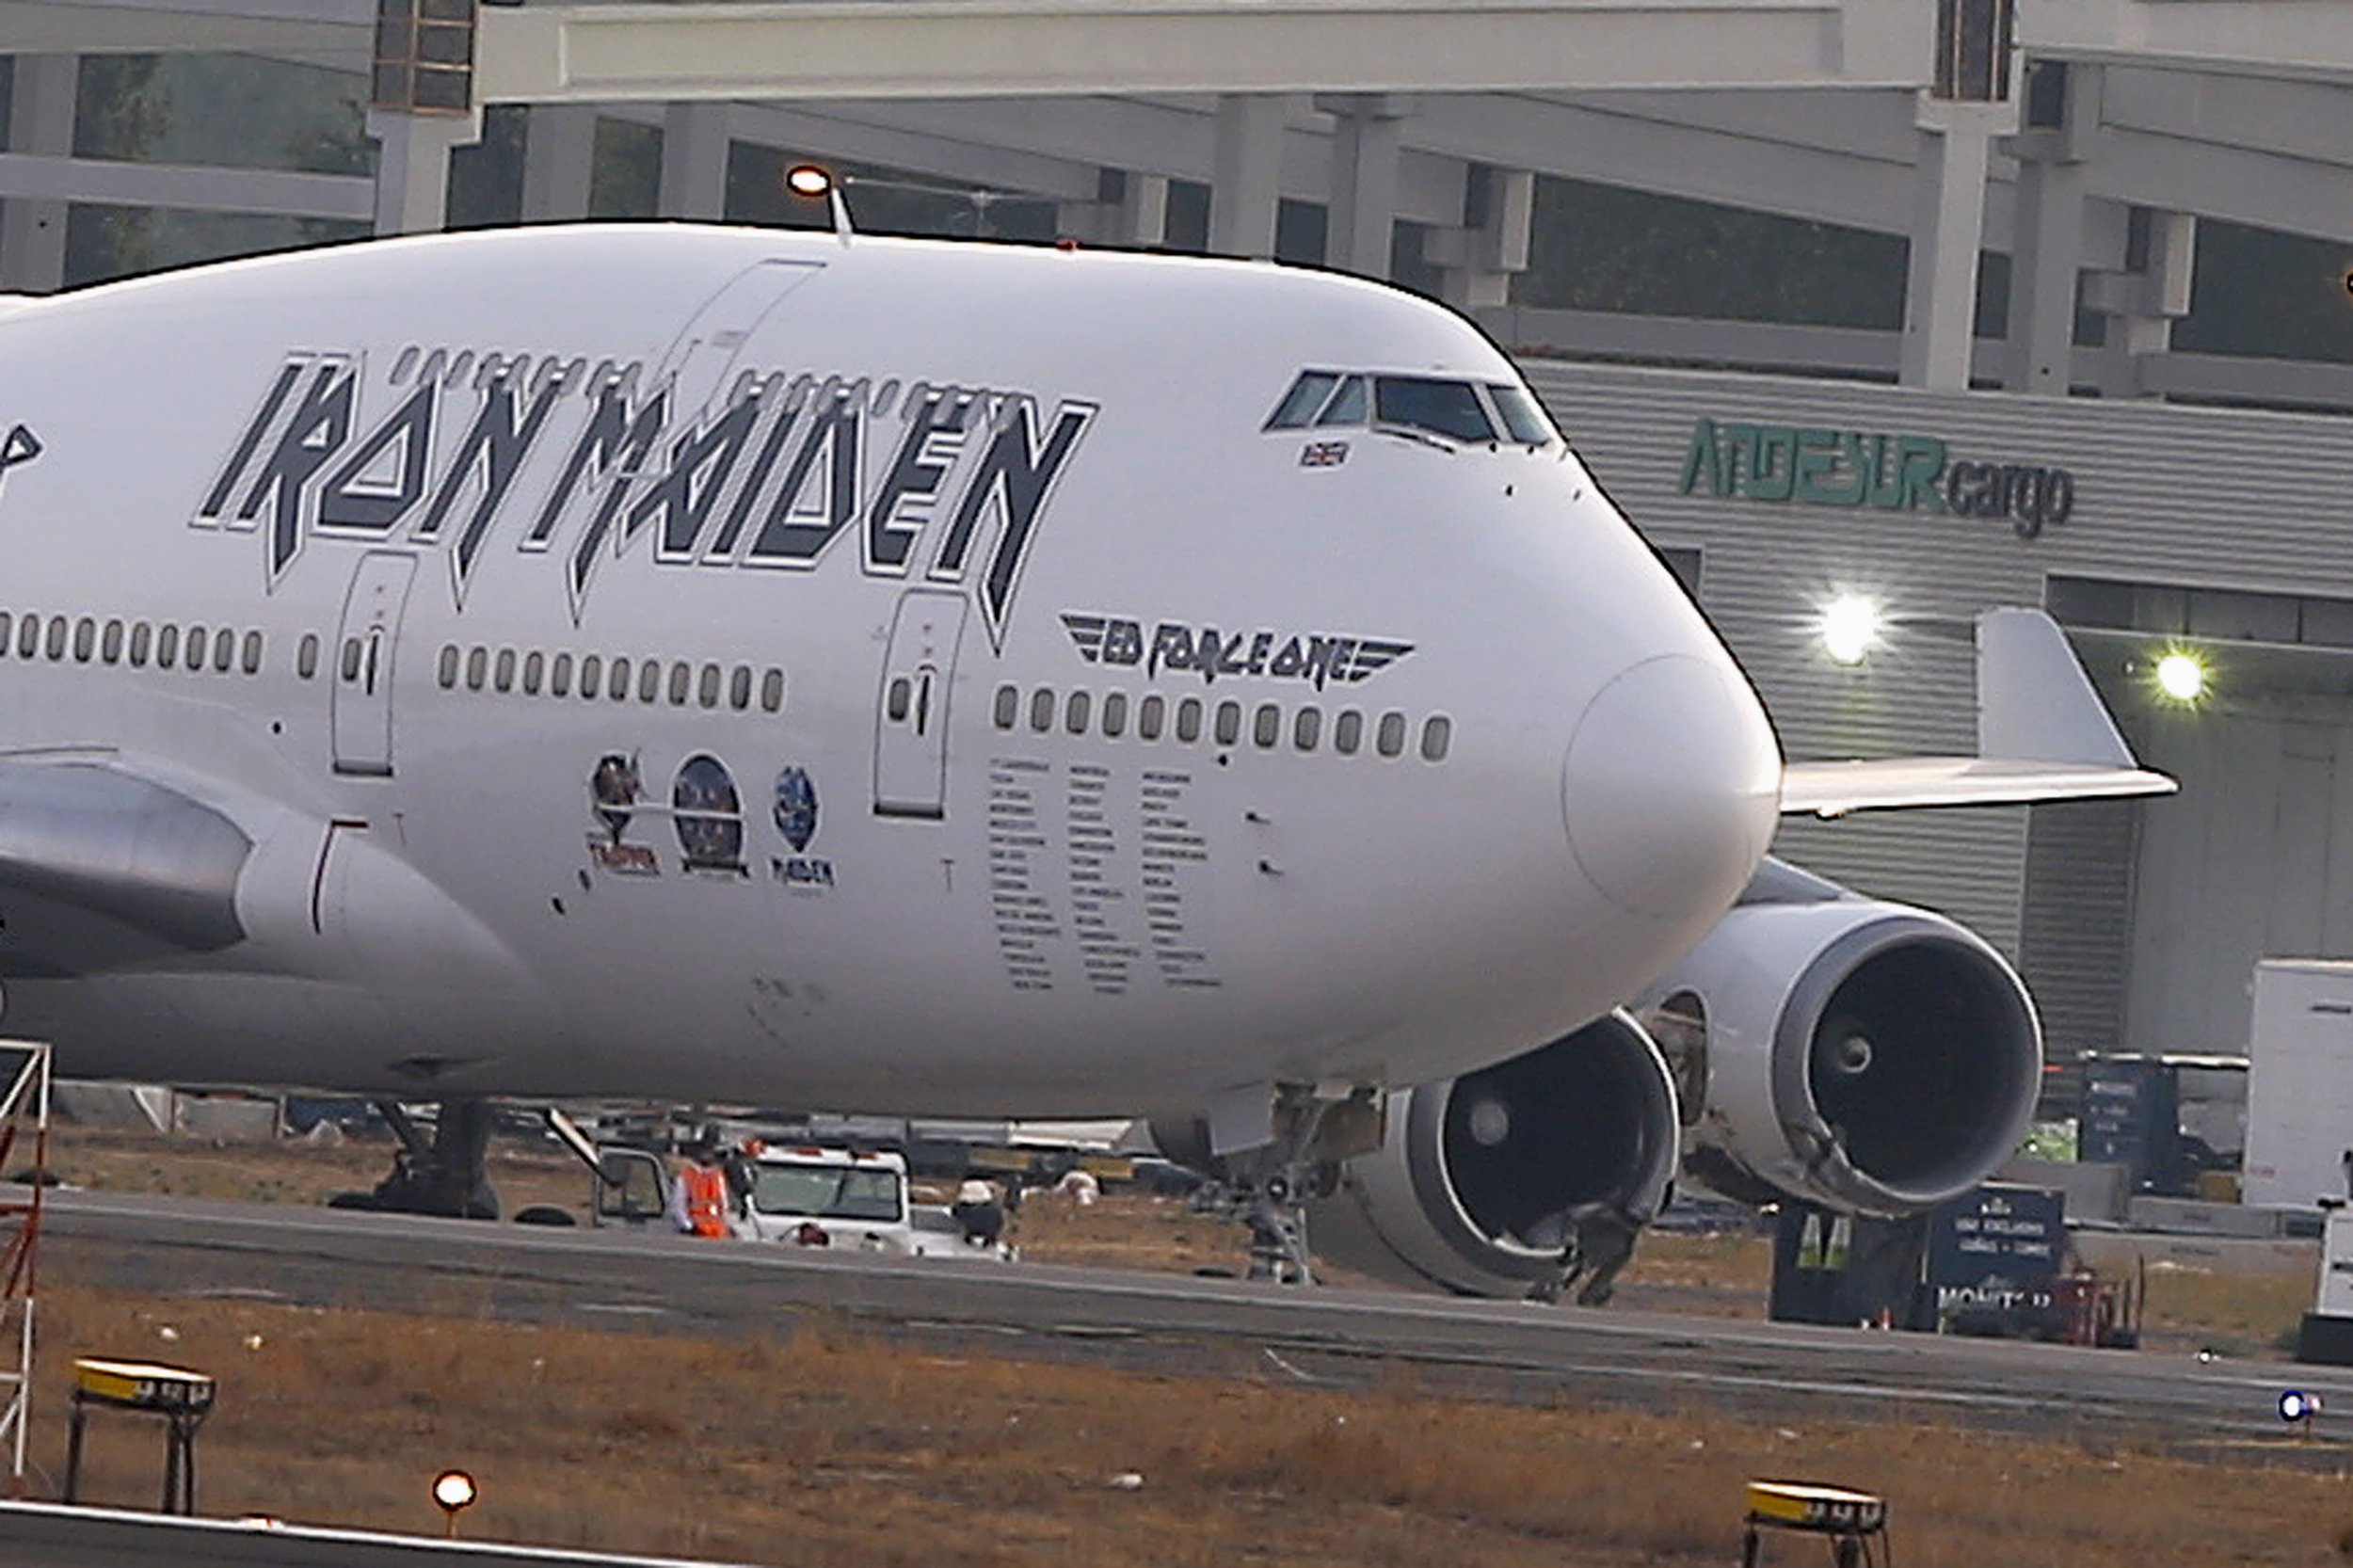 Iron Maiden's plane